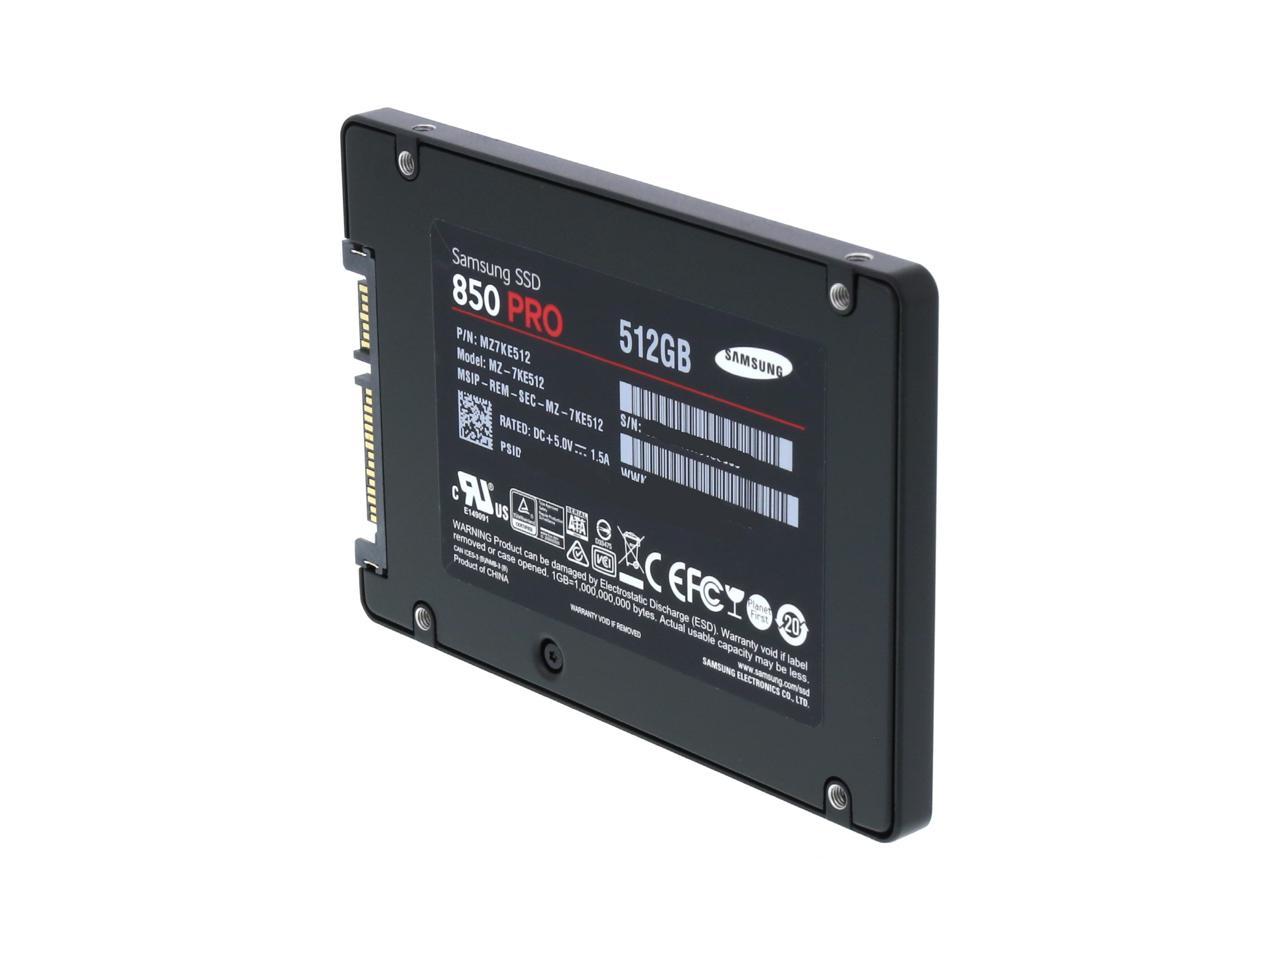 MZ-7KE512 SAMSUNG 850 Pro Series 512GB 2.5 SATA III SSD MZ-7KE512BW 